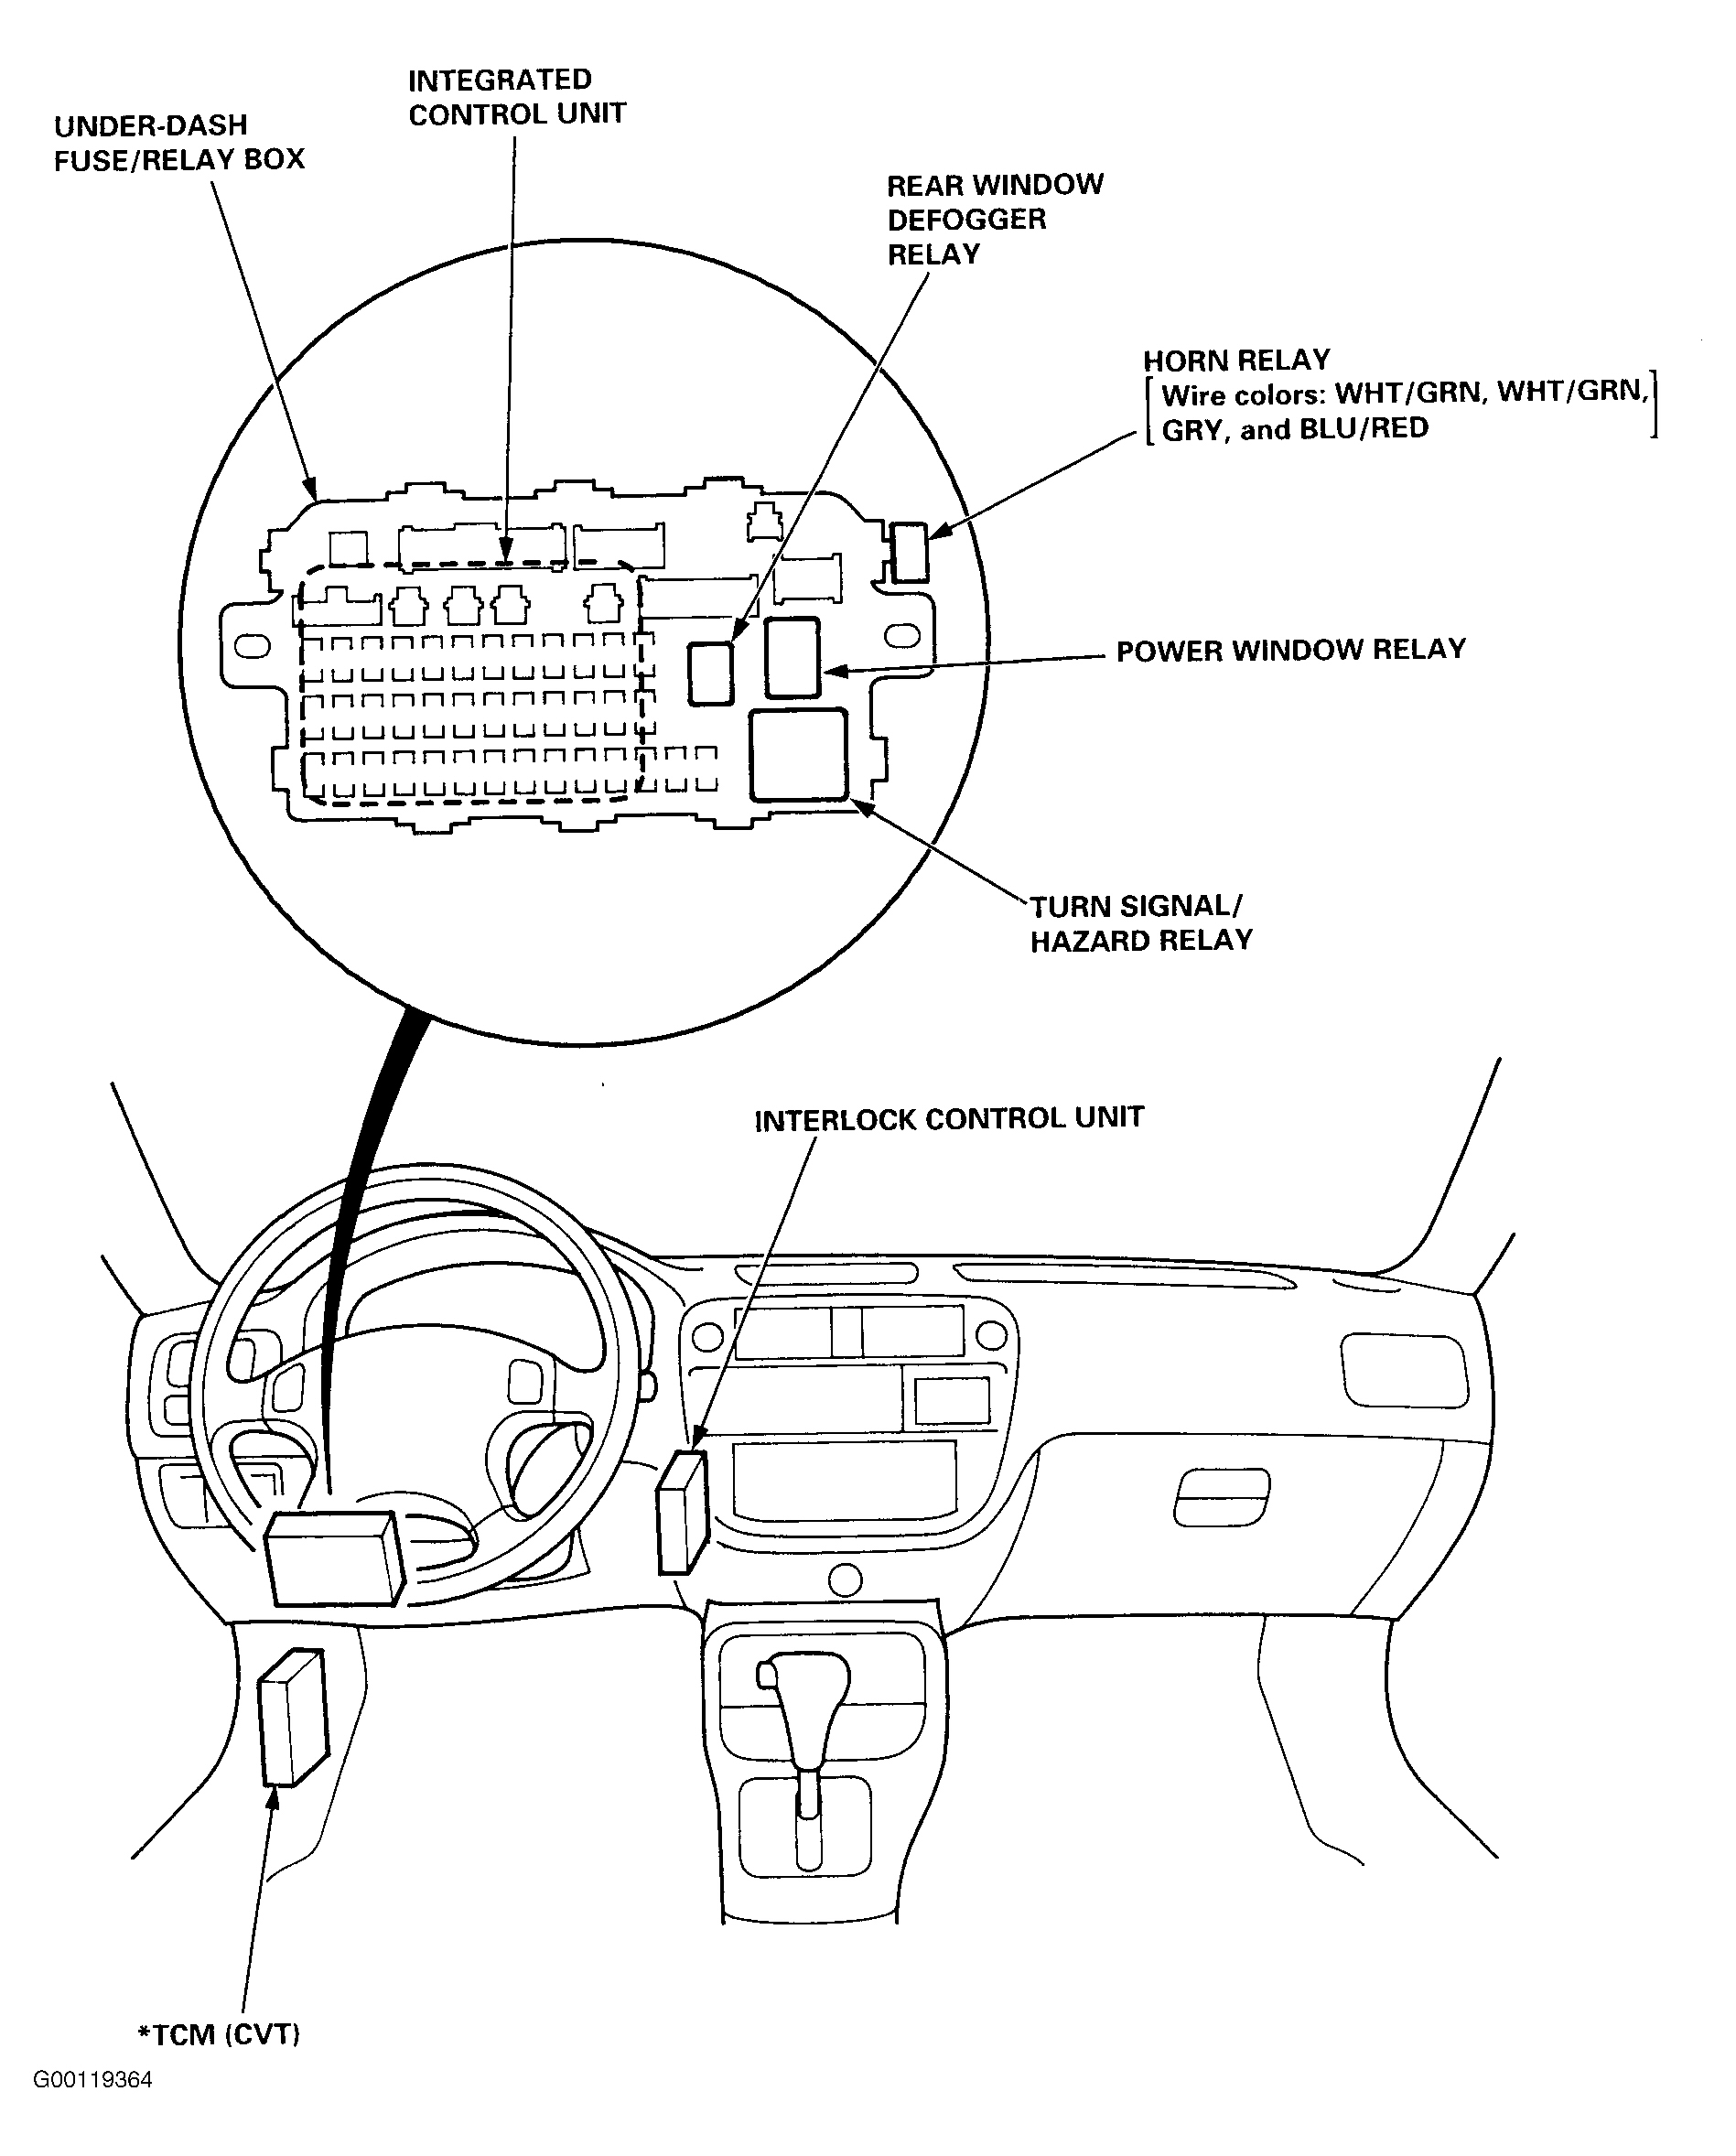 Honda Civic EX 1999 - Component Locations -  Locating Under-Dash Fuse/Relay Box (1996-97)